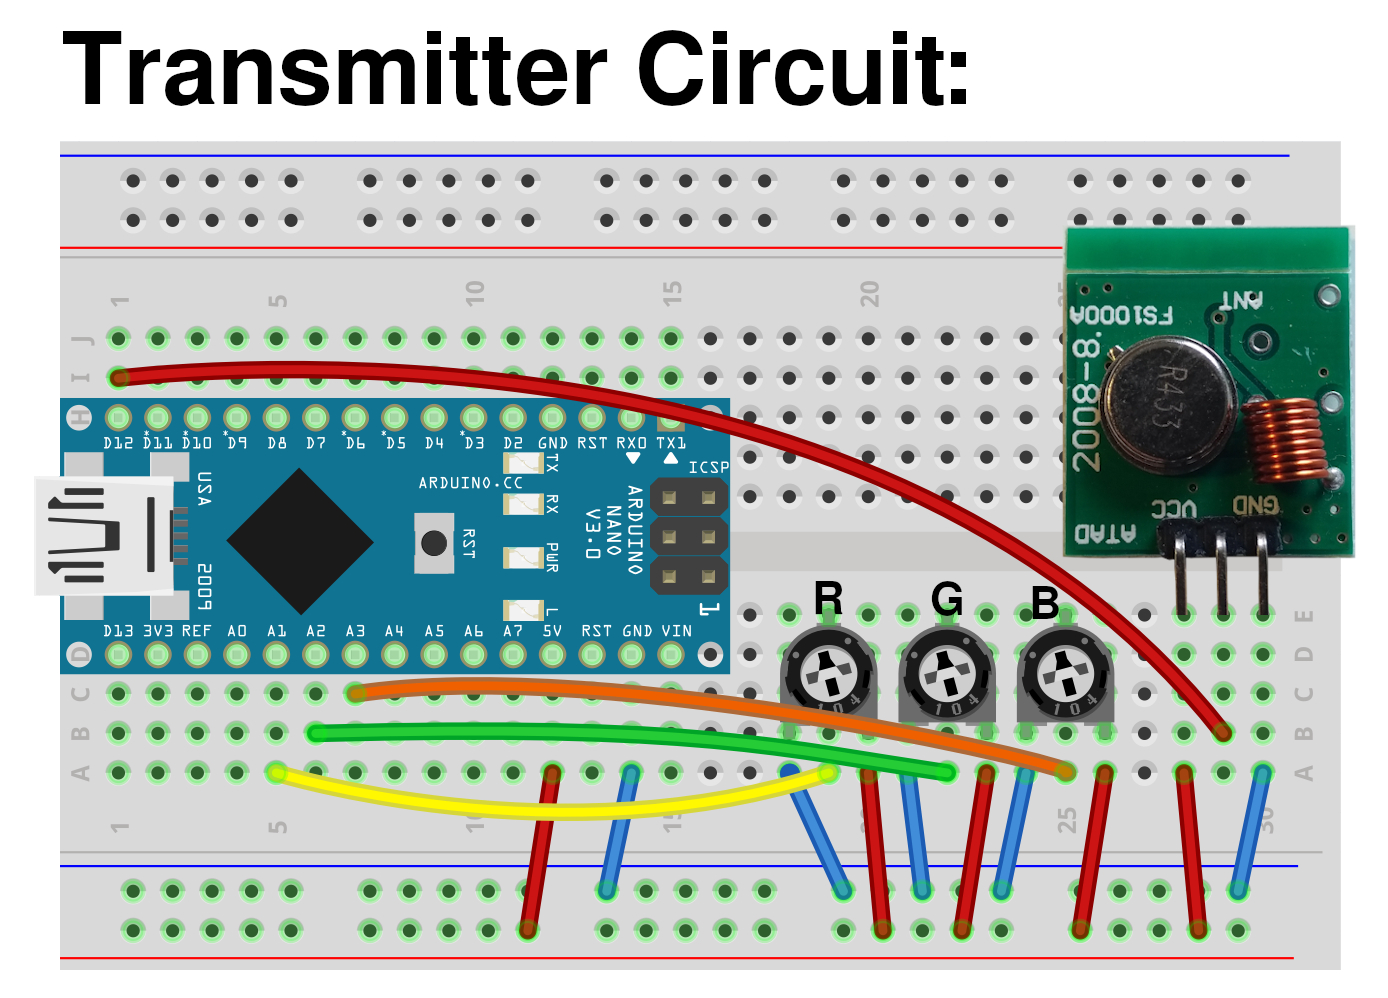 Schematics of the transmitter circuit